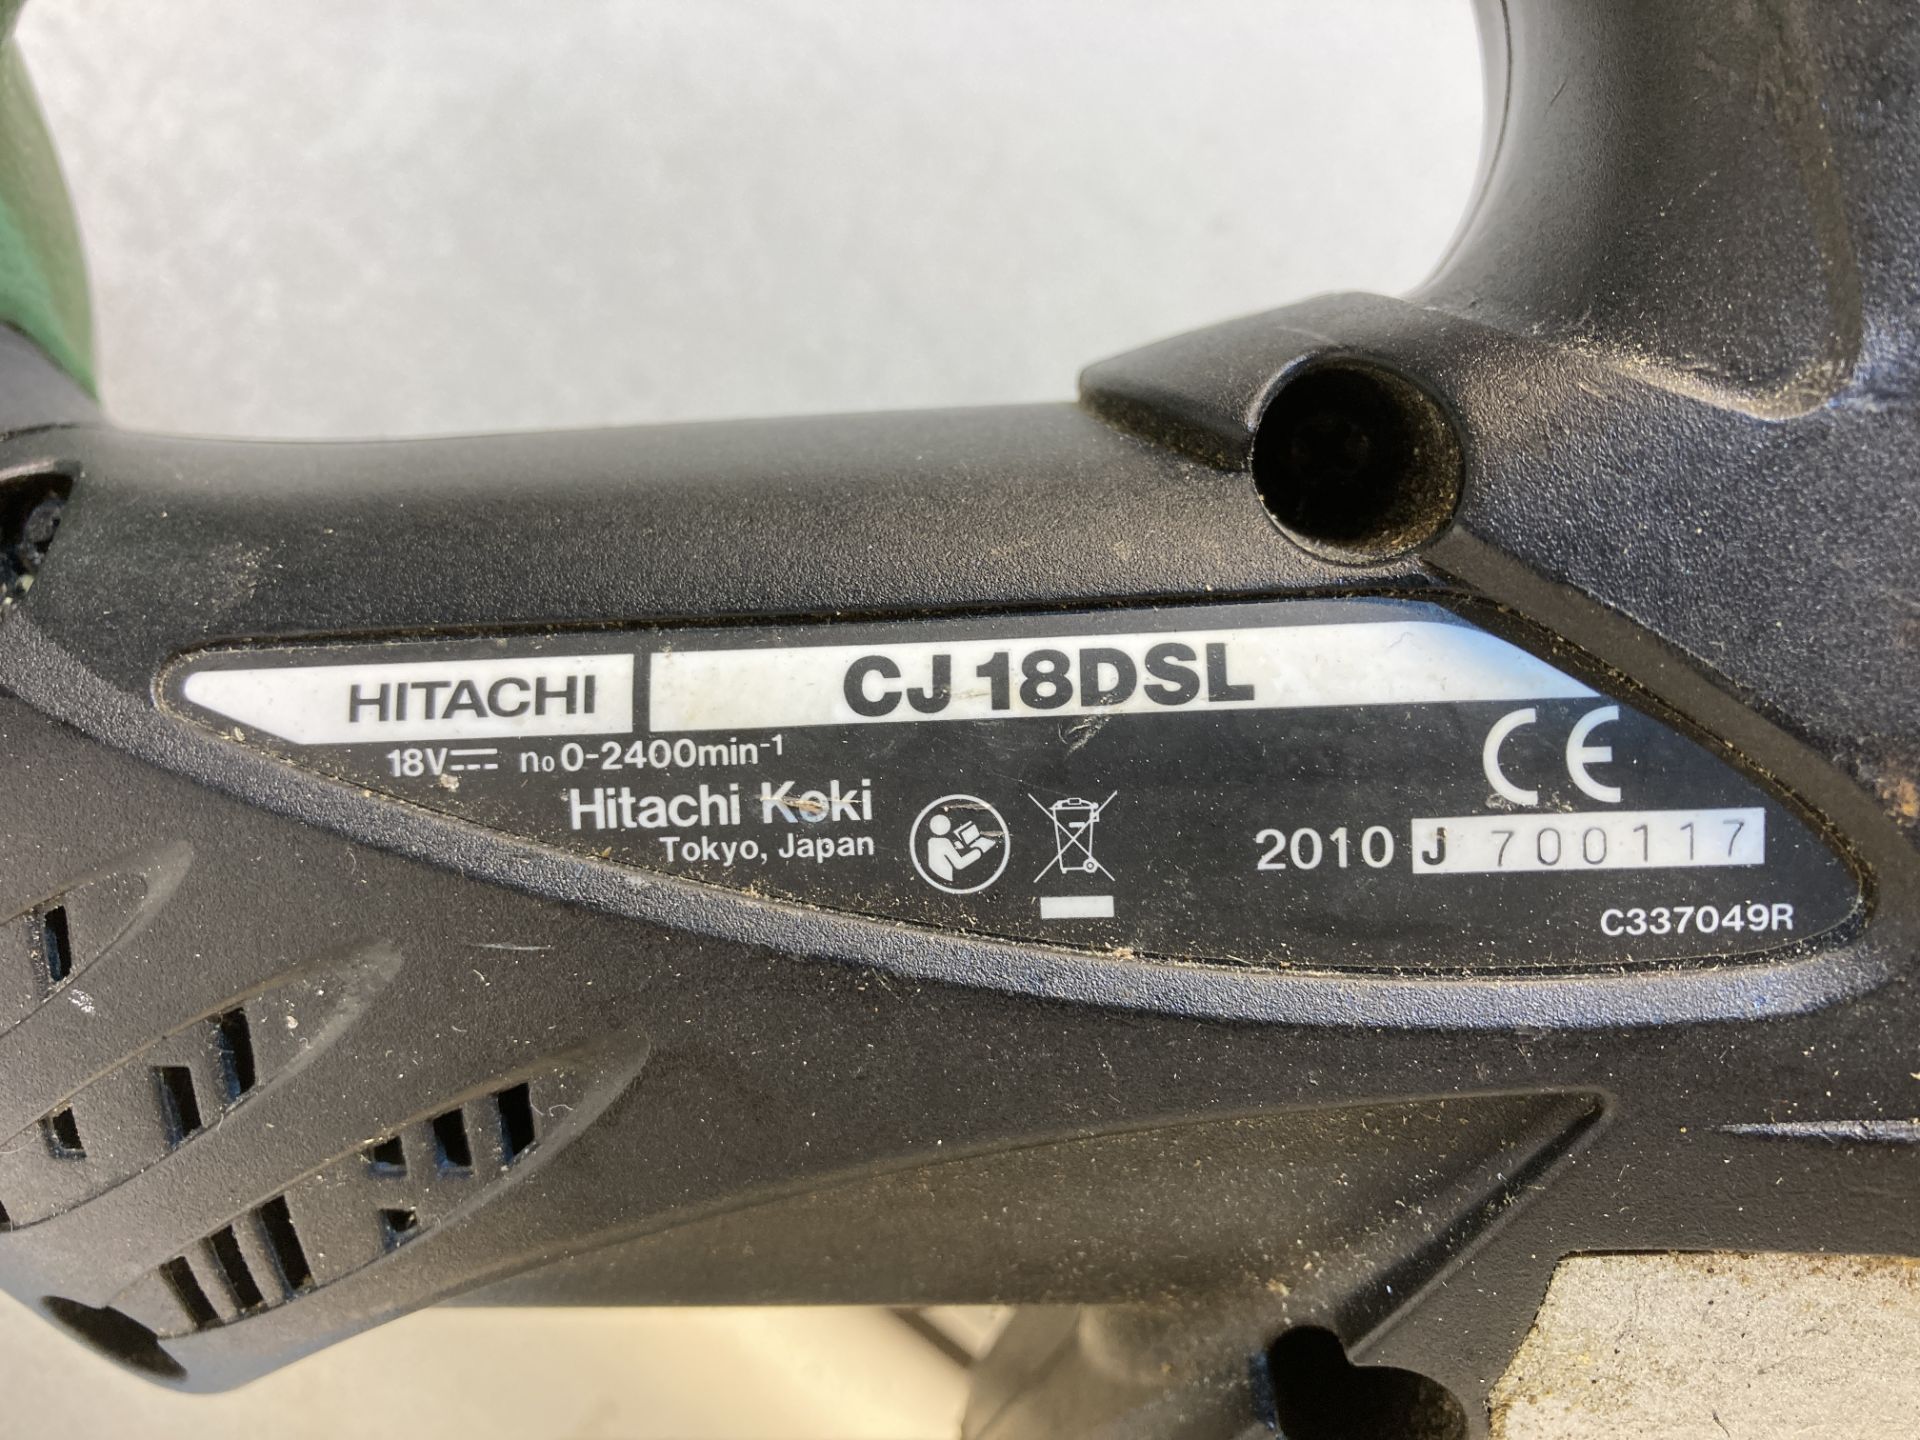 Hitachi CJ18DSC 18v Jigsaw W/ Battery - Image 4 of 6